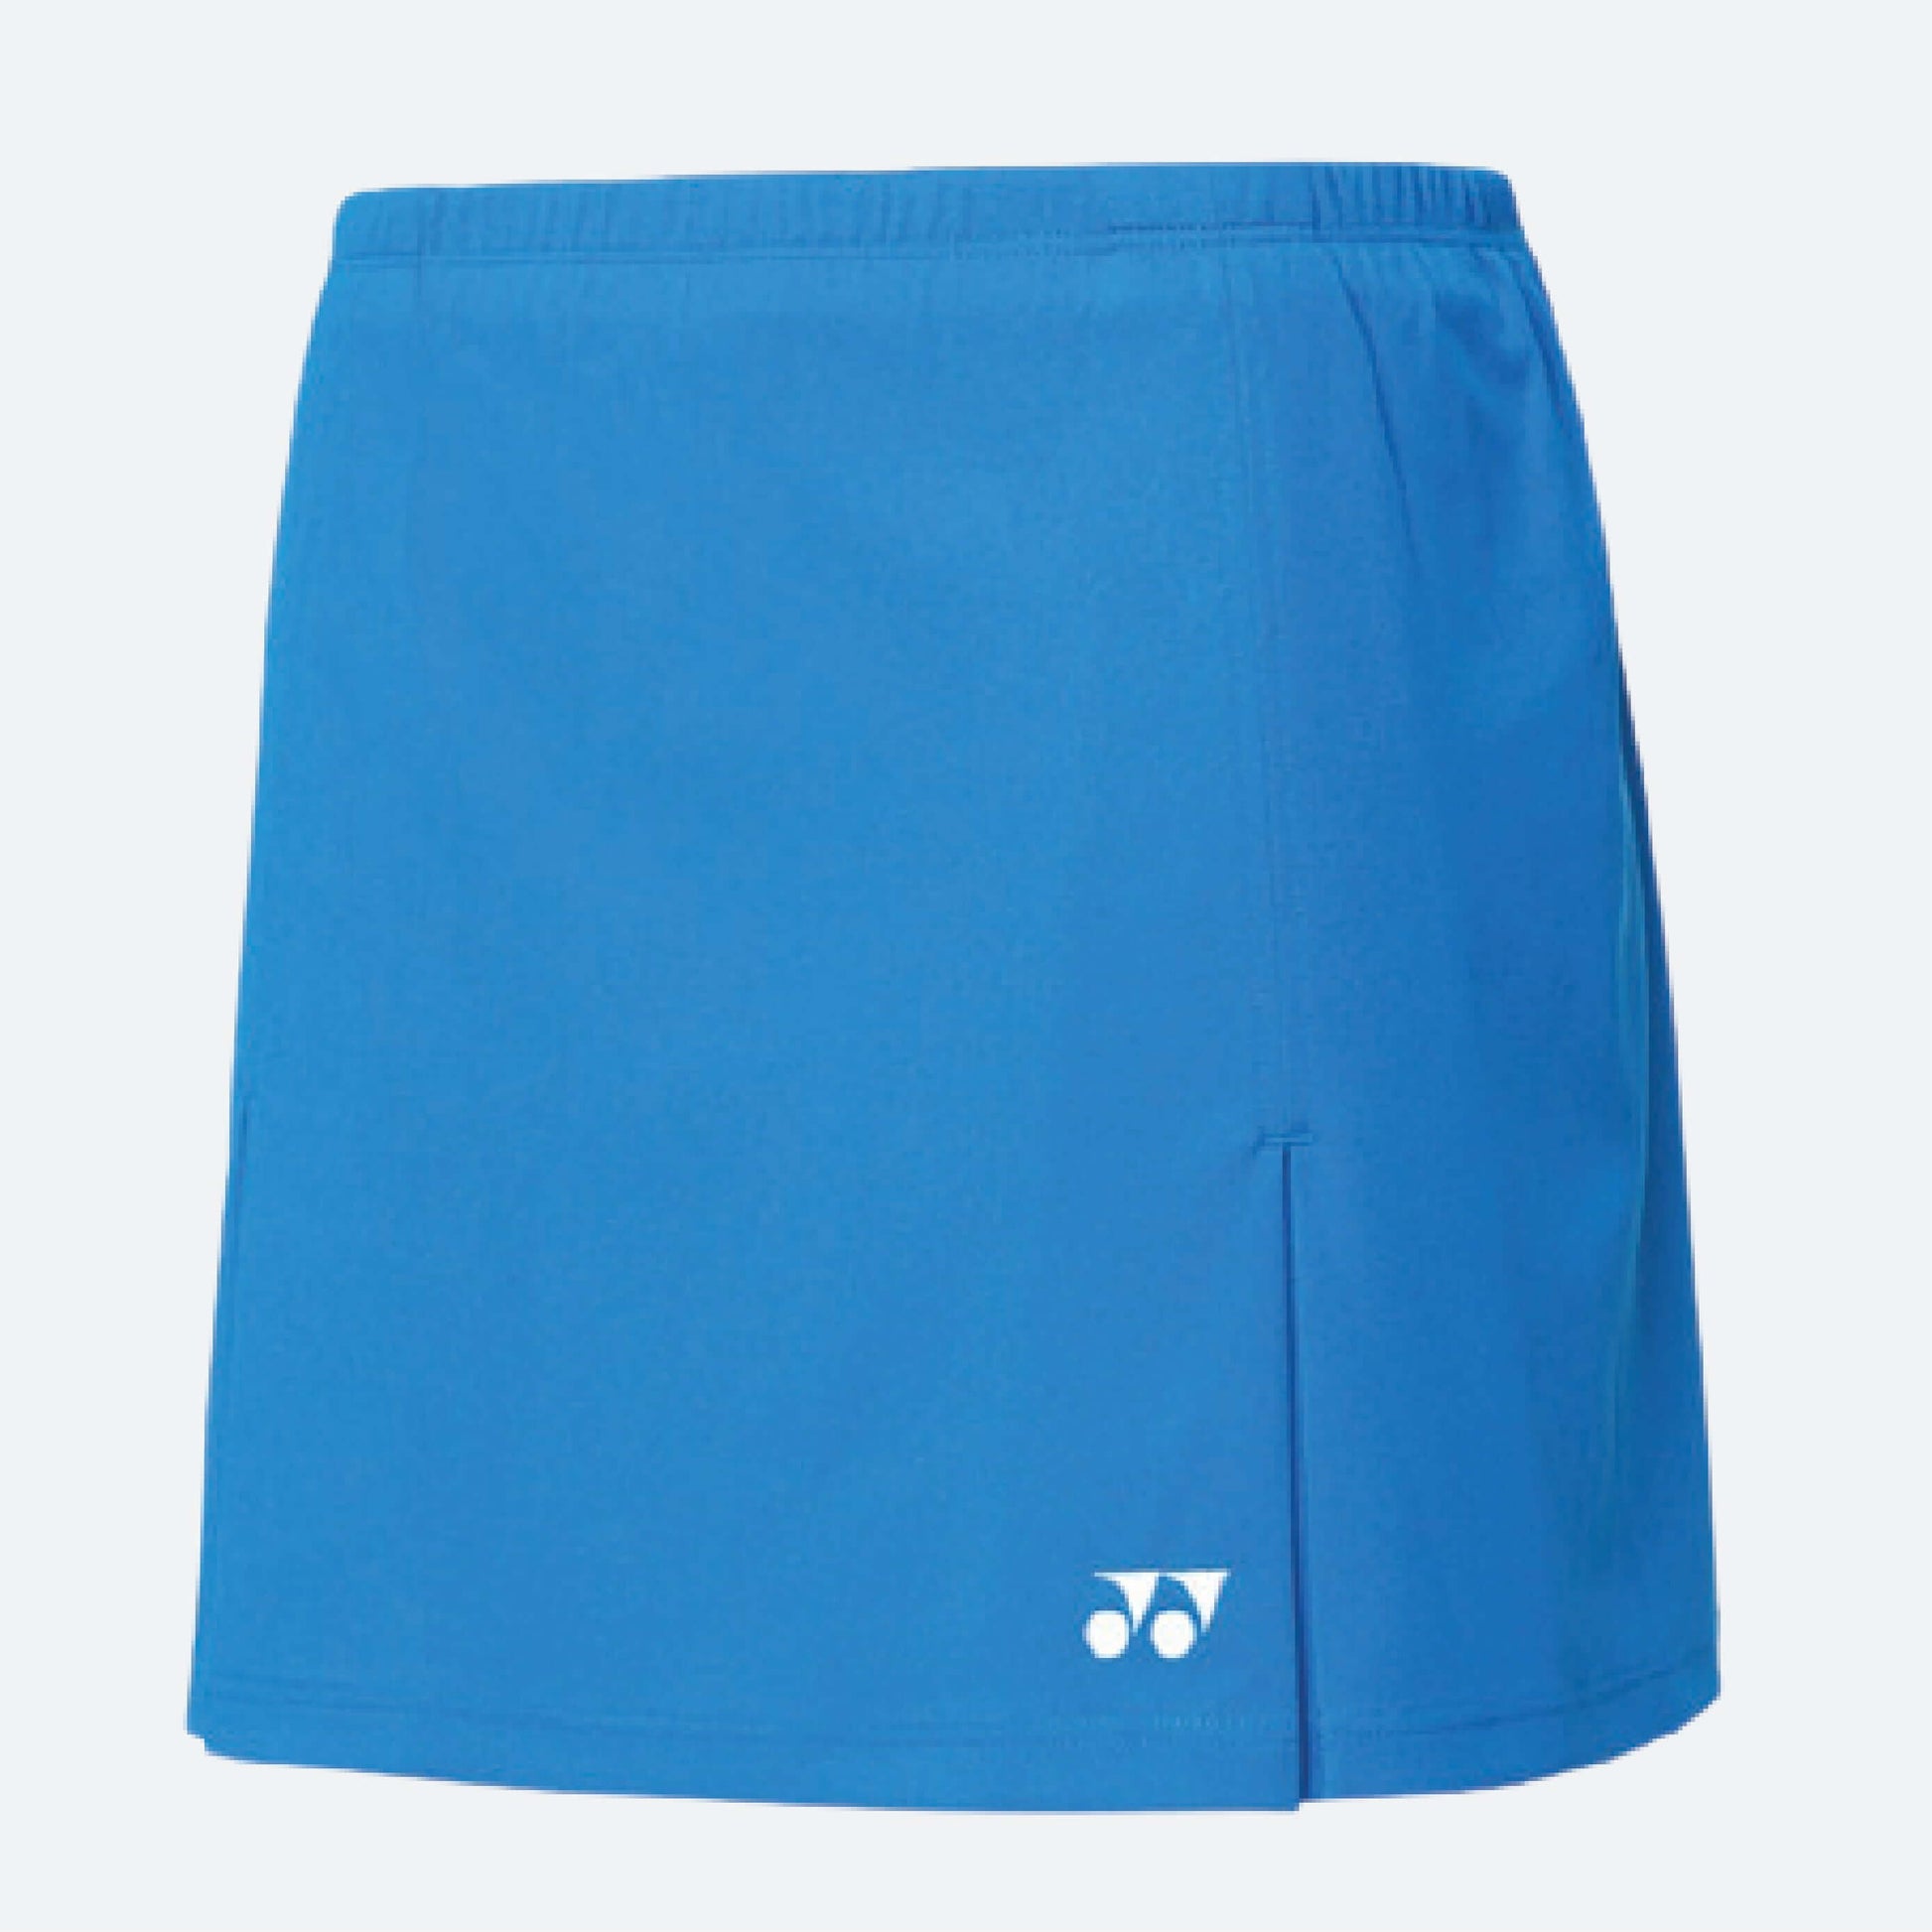 Yonex Women's Skirt (Turquoise) 81PS001F